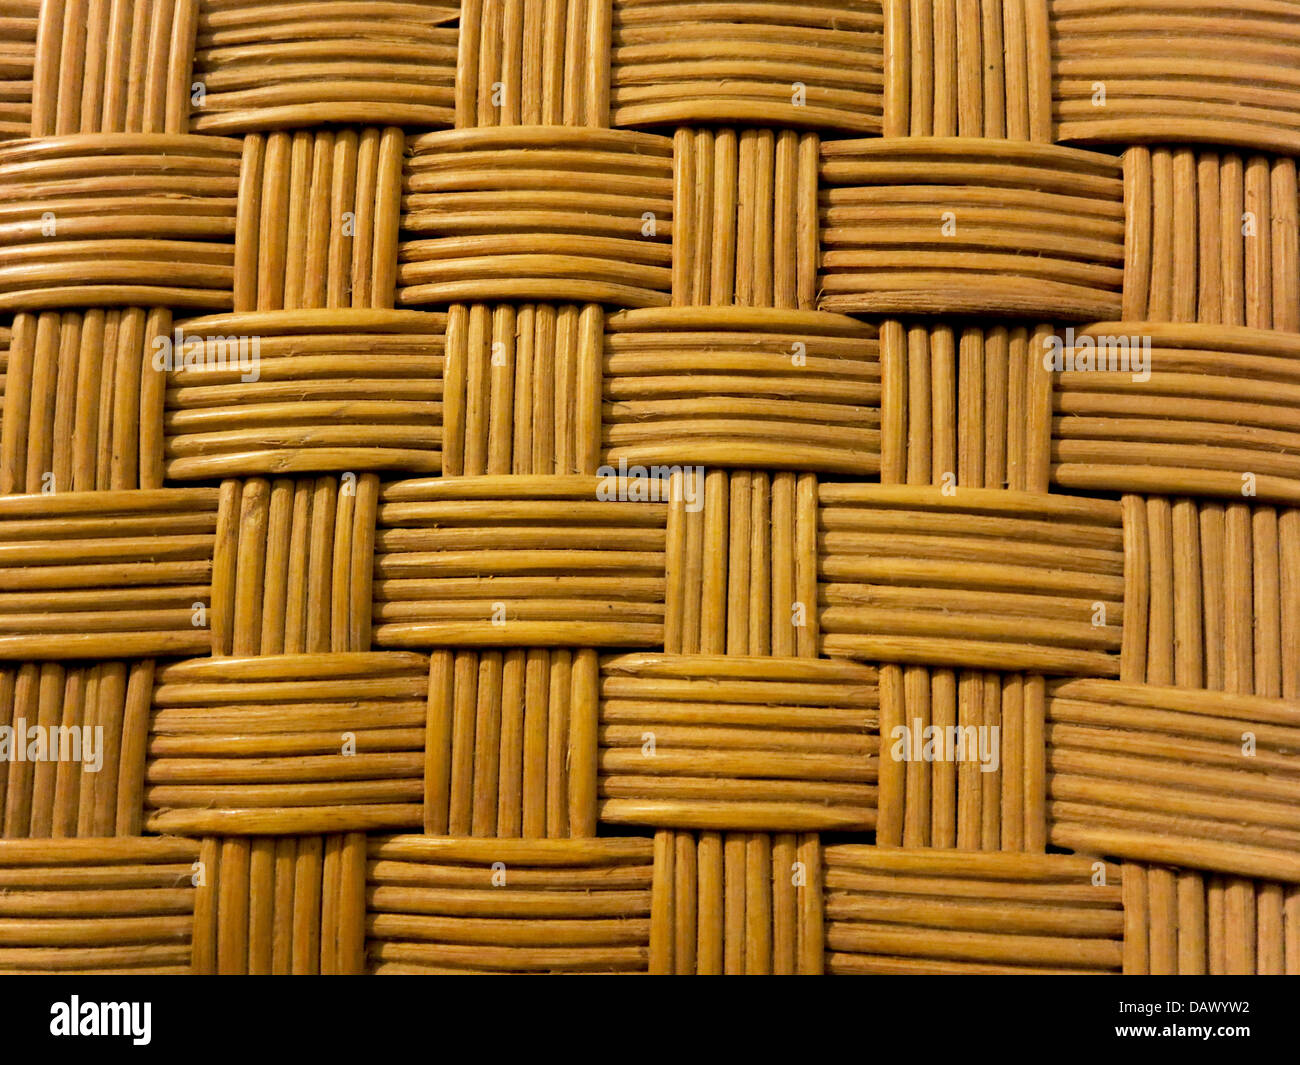 Artesanía de bambú fotografías e imágenes de alta resolución - Alamy